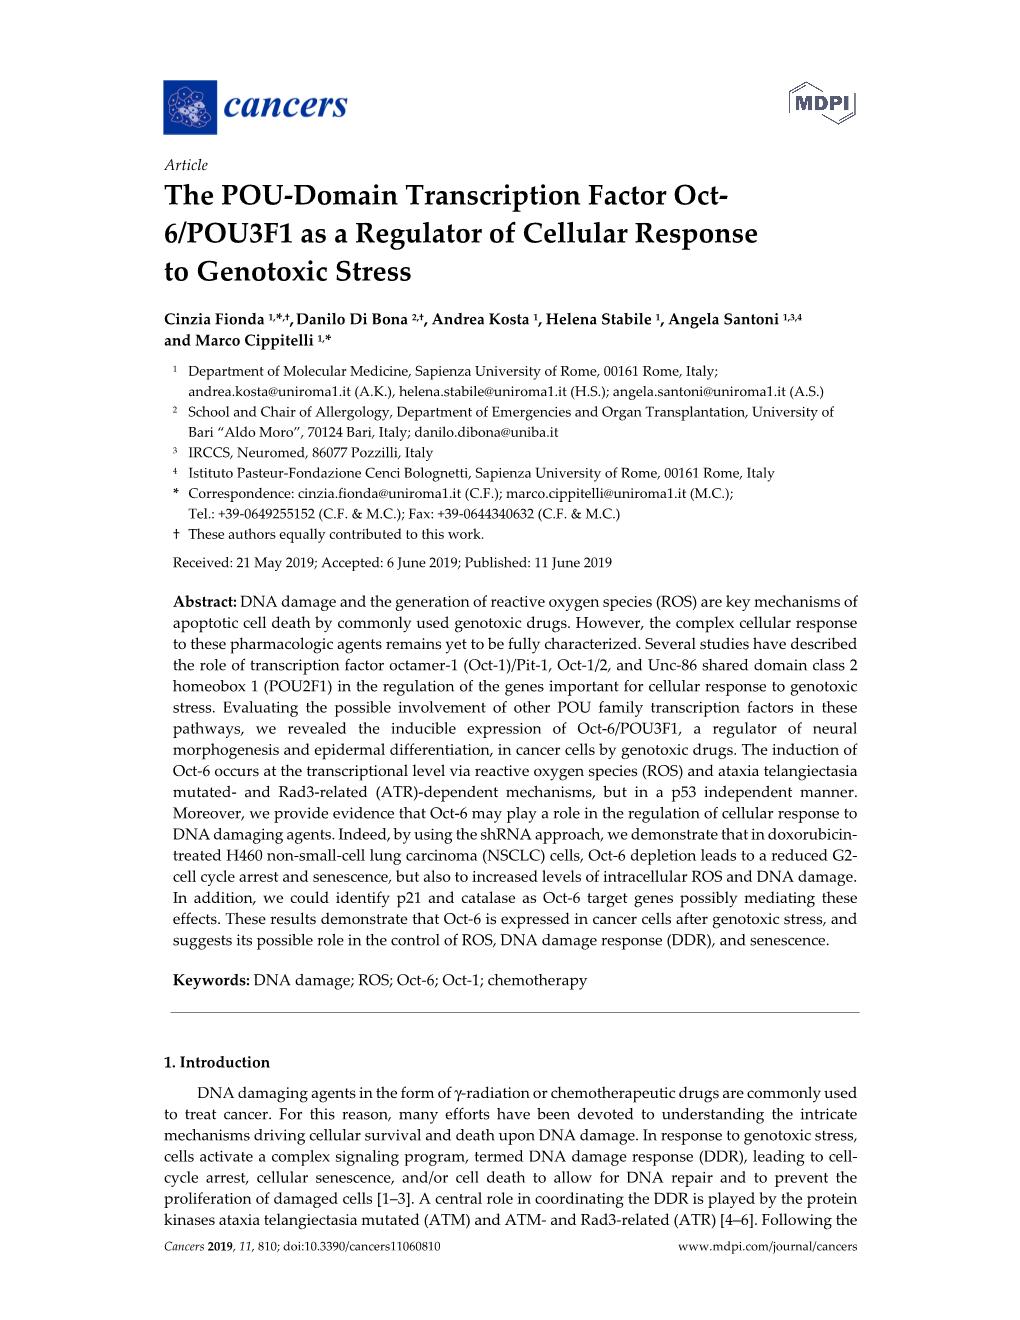 The POU-Domain Transcription Factor Oct- 6/POU3F1 As a Regulator of Cellular Response to Genotoxic Stress